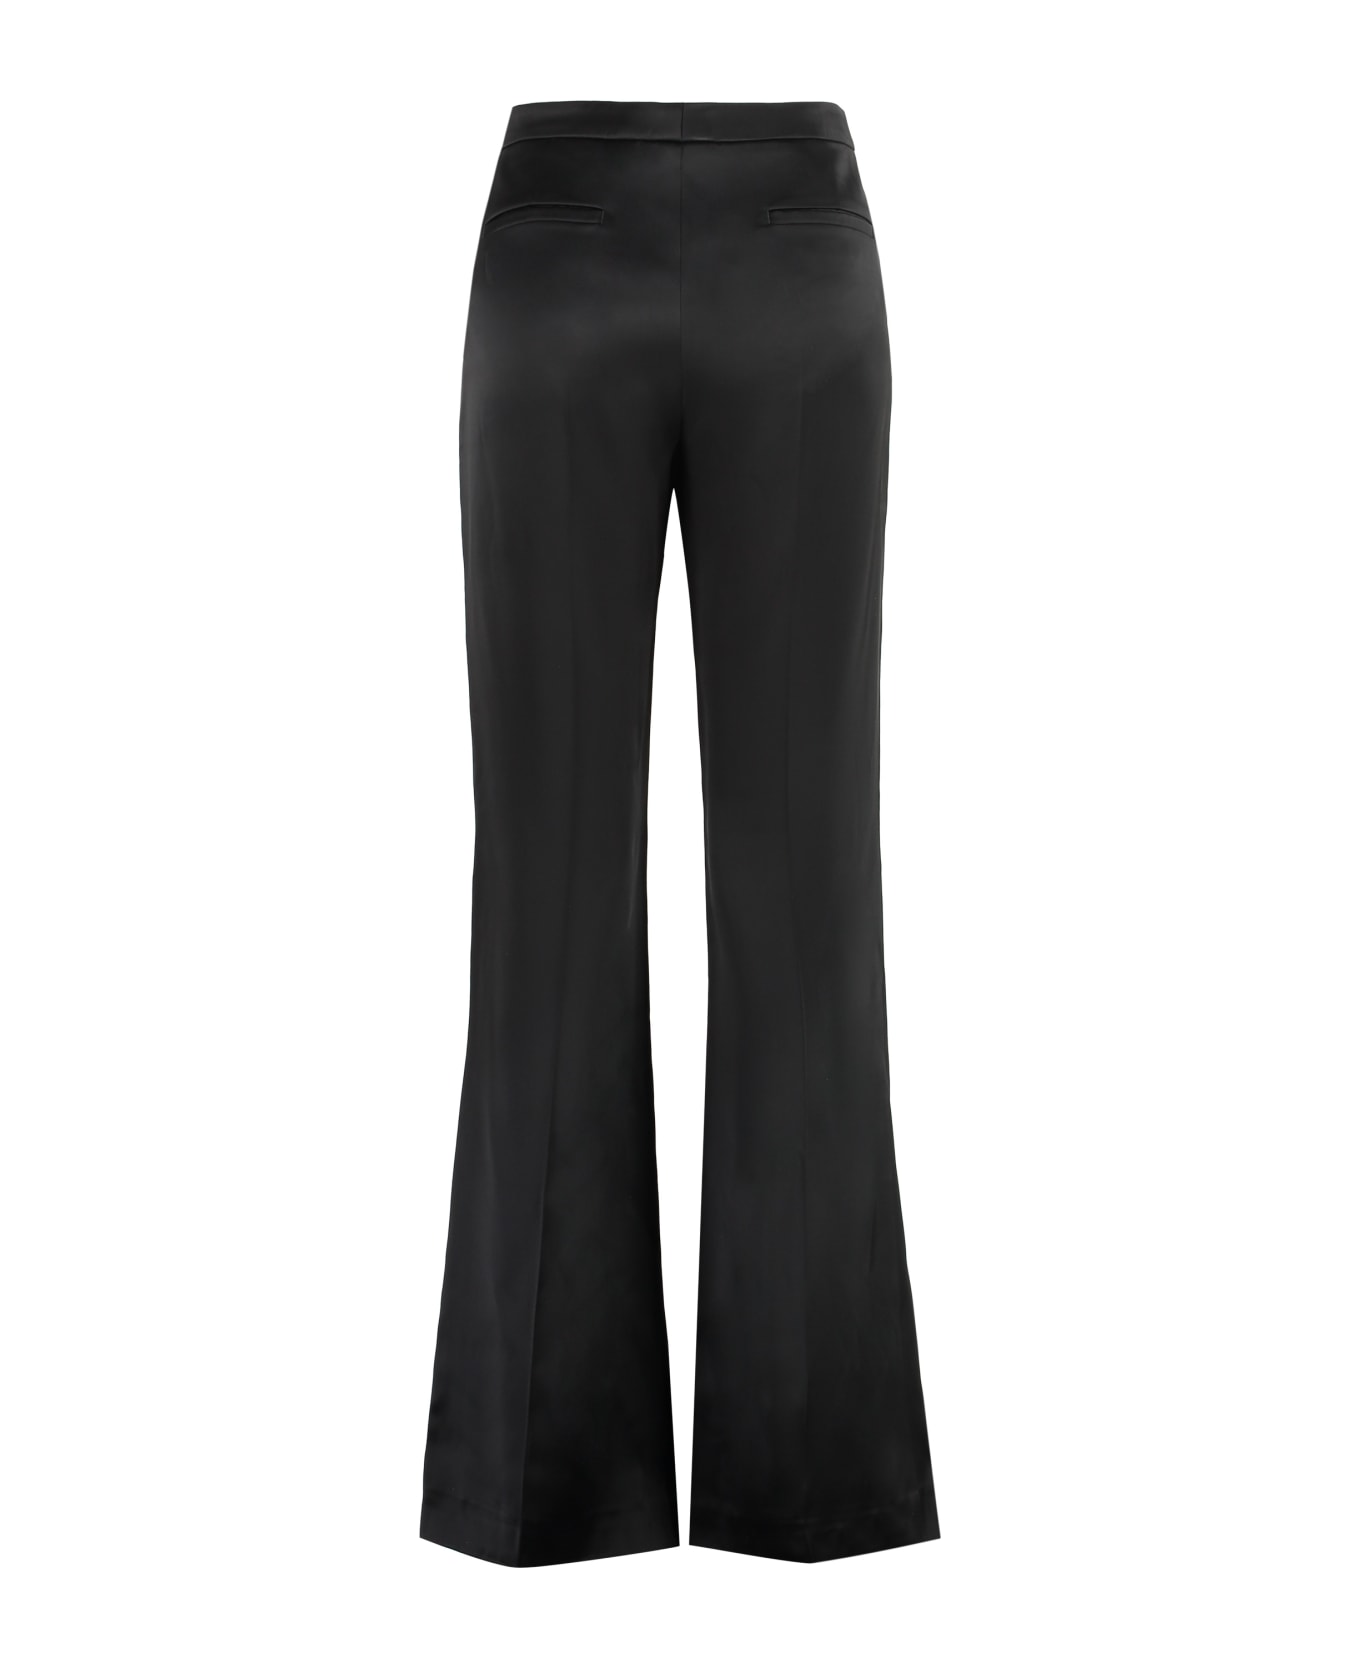 Givenchy Flare Tailoring Pants - black